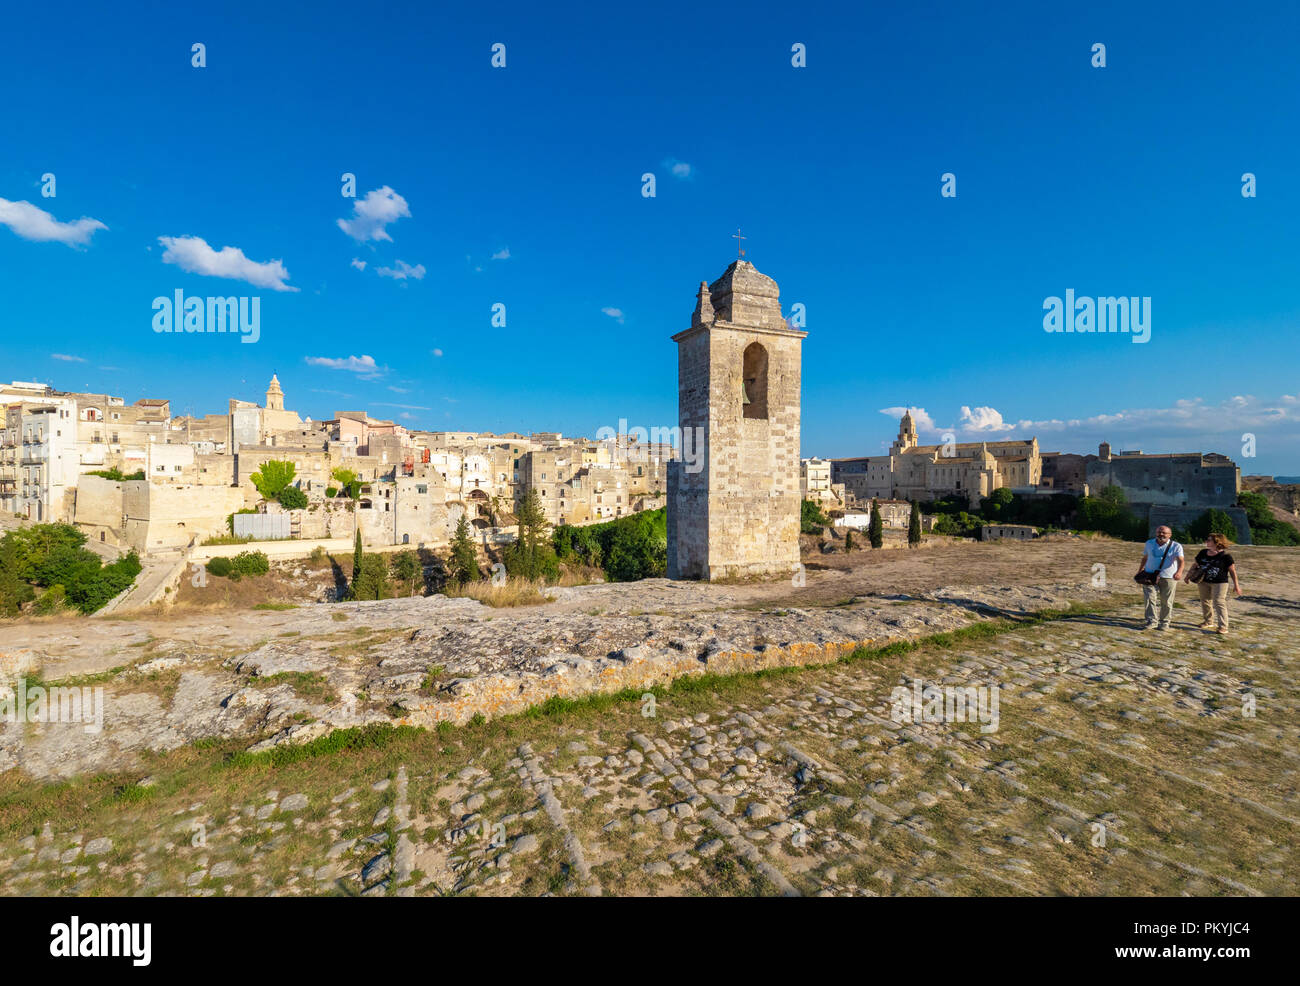 Gravina in Puglia (Italy) - The suggestive old city in stone like Matera, in province of Bari, Apulia region. Here a view of the historic center. Stock Photo